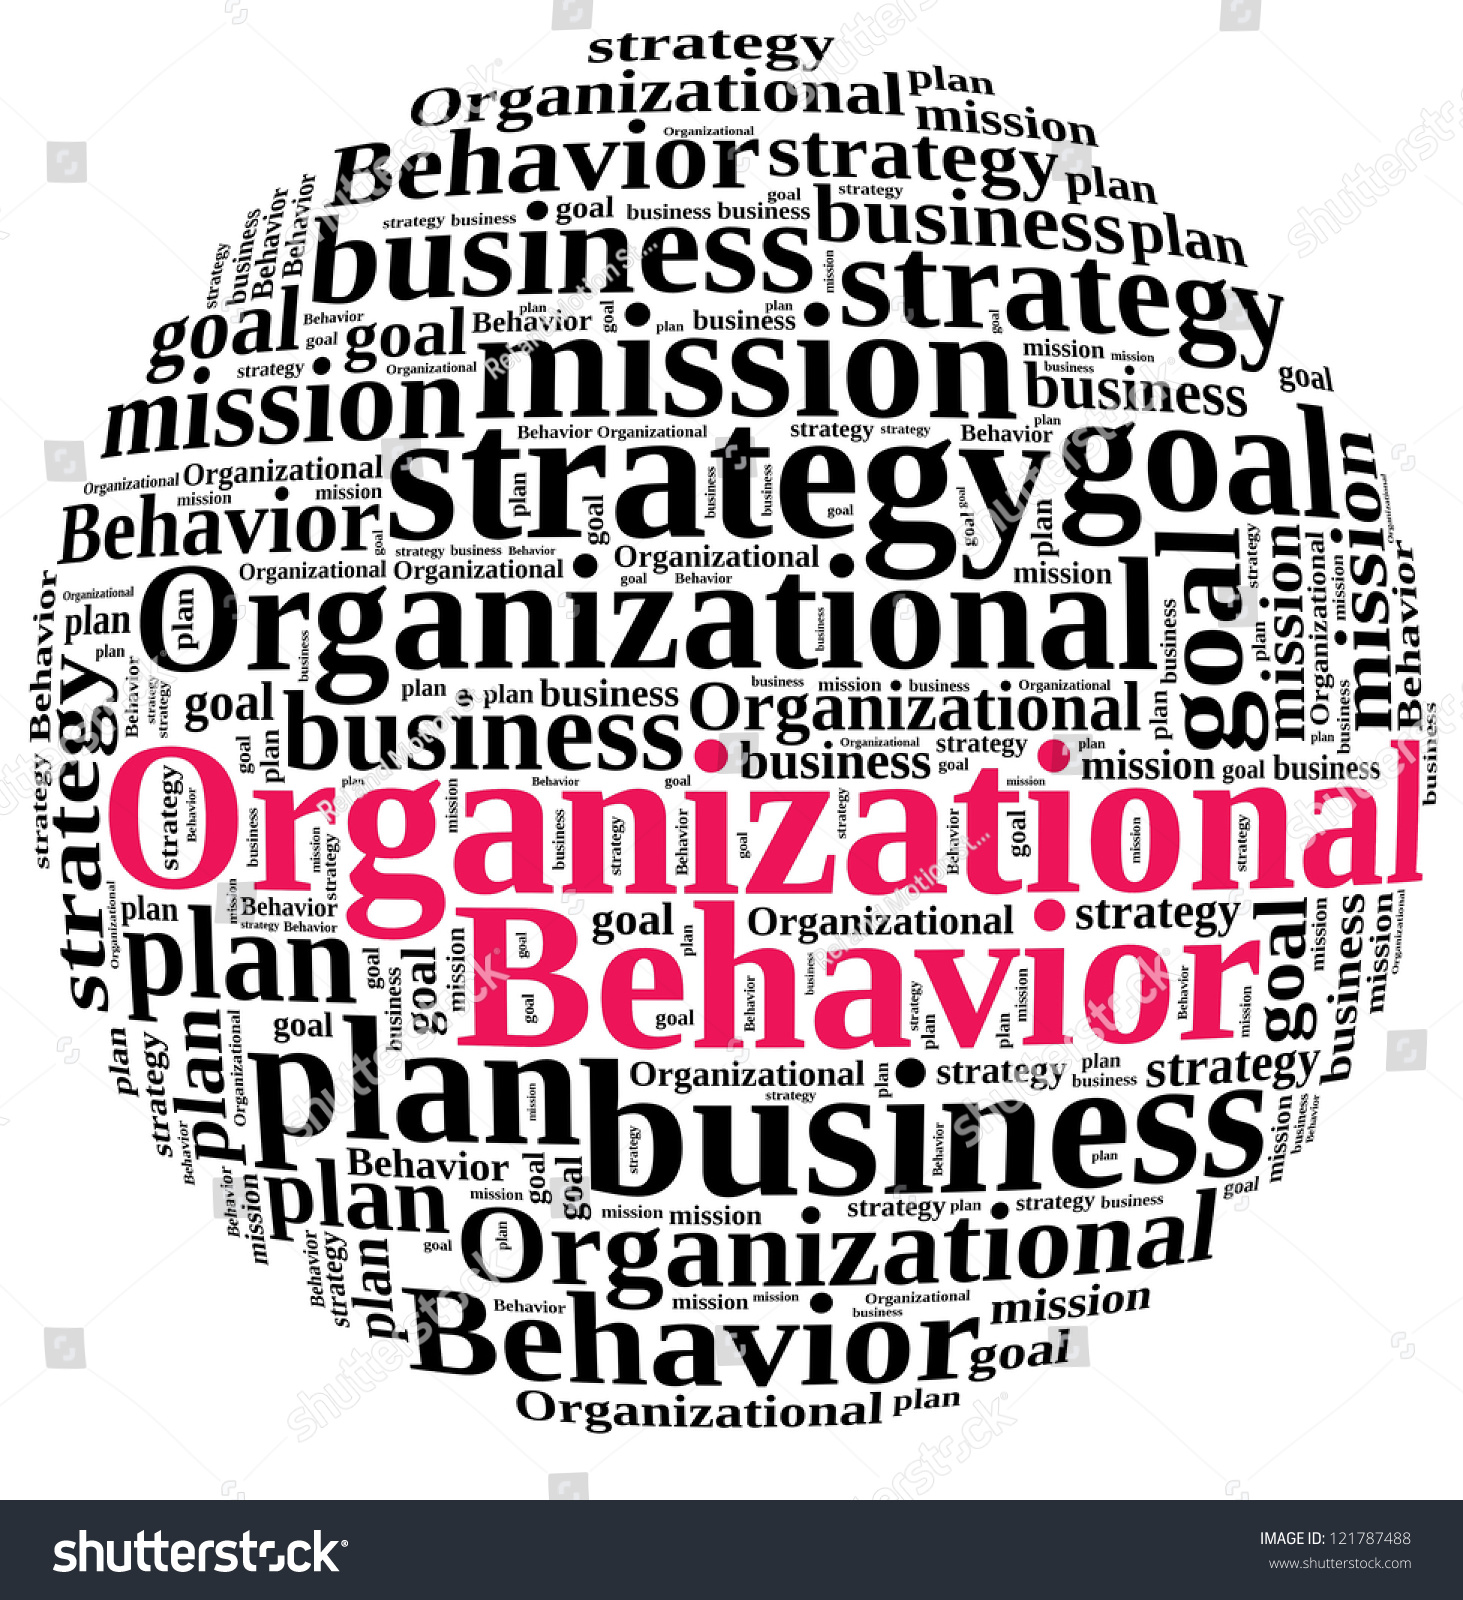 clipart organizational behavior - photo #11